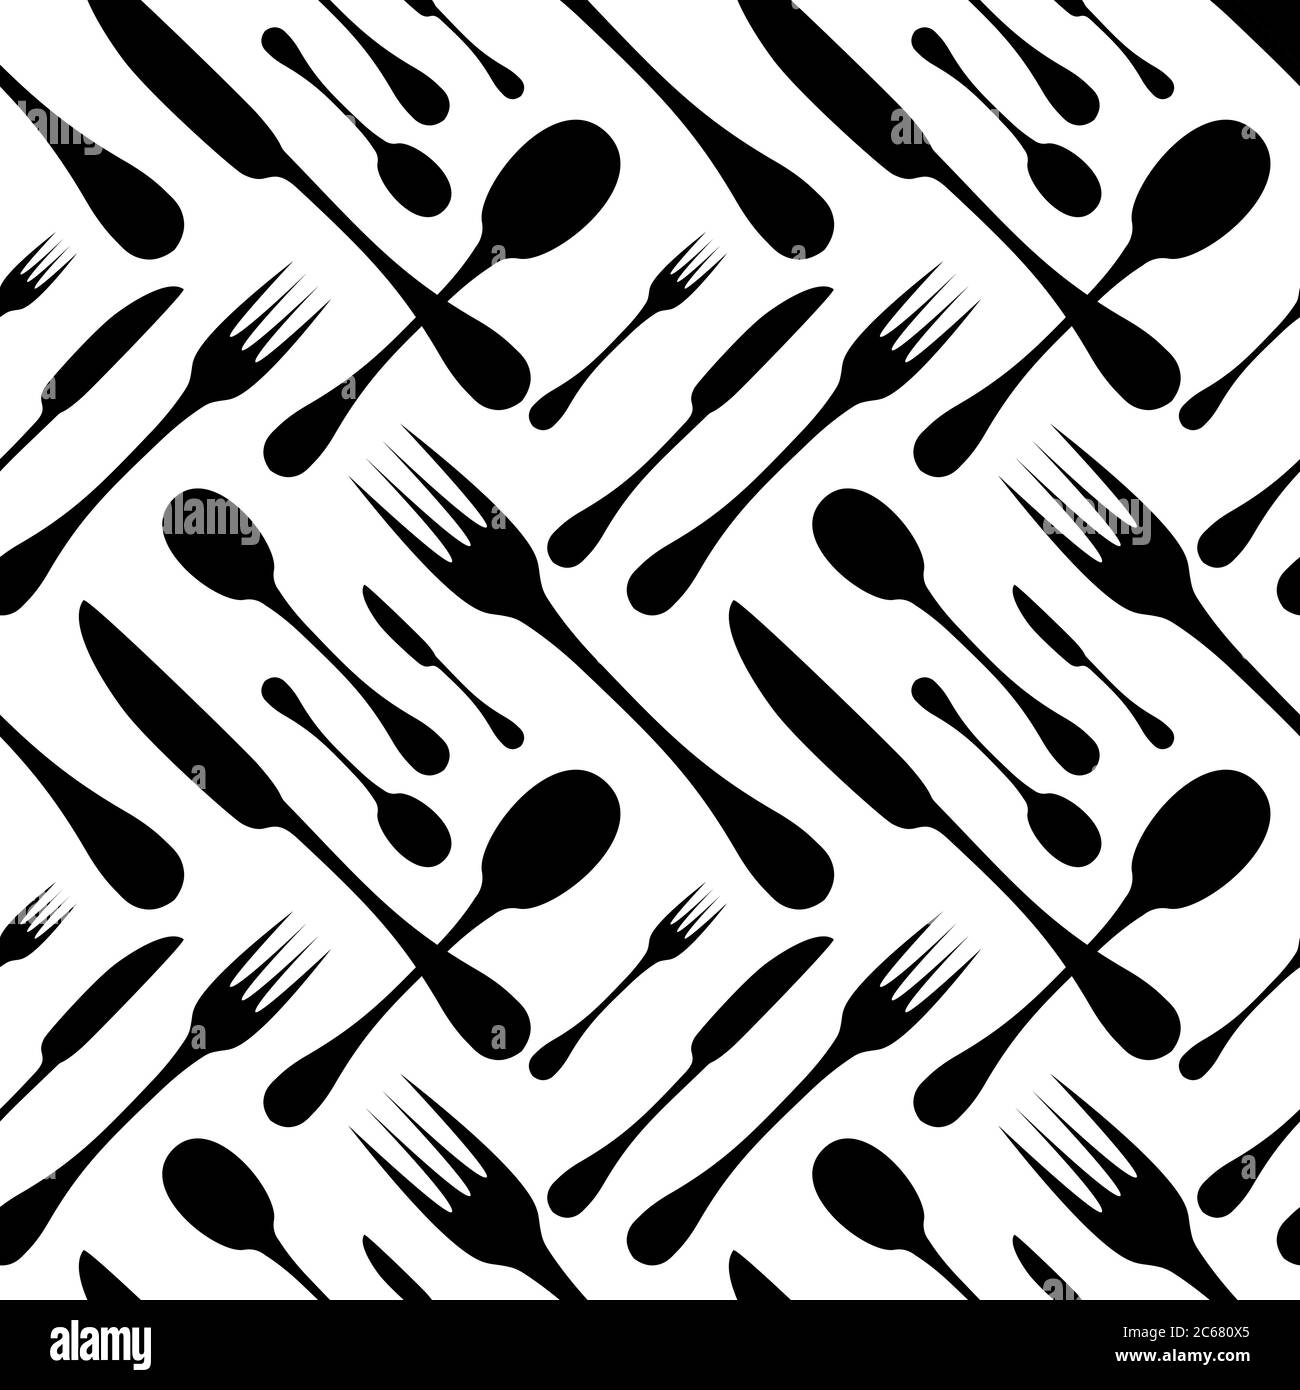 Wallpaper spoon knife plug Cutlery images for desktop section разное   download